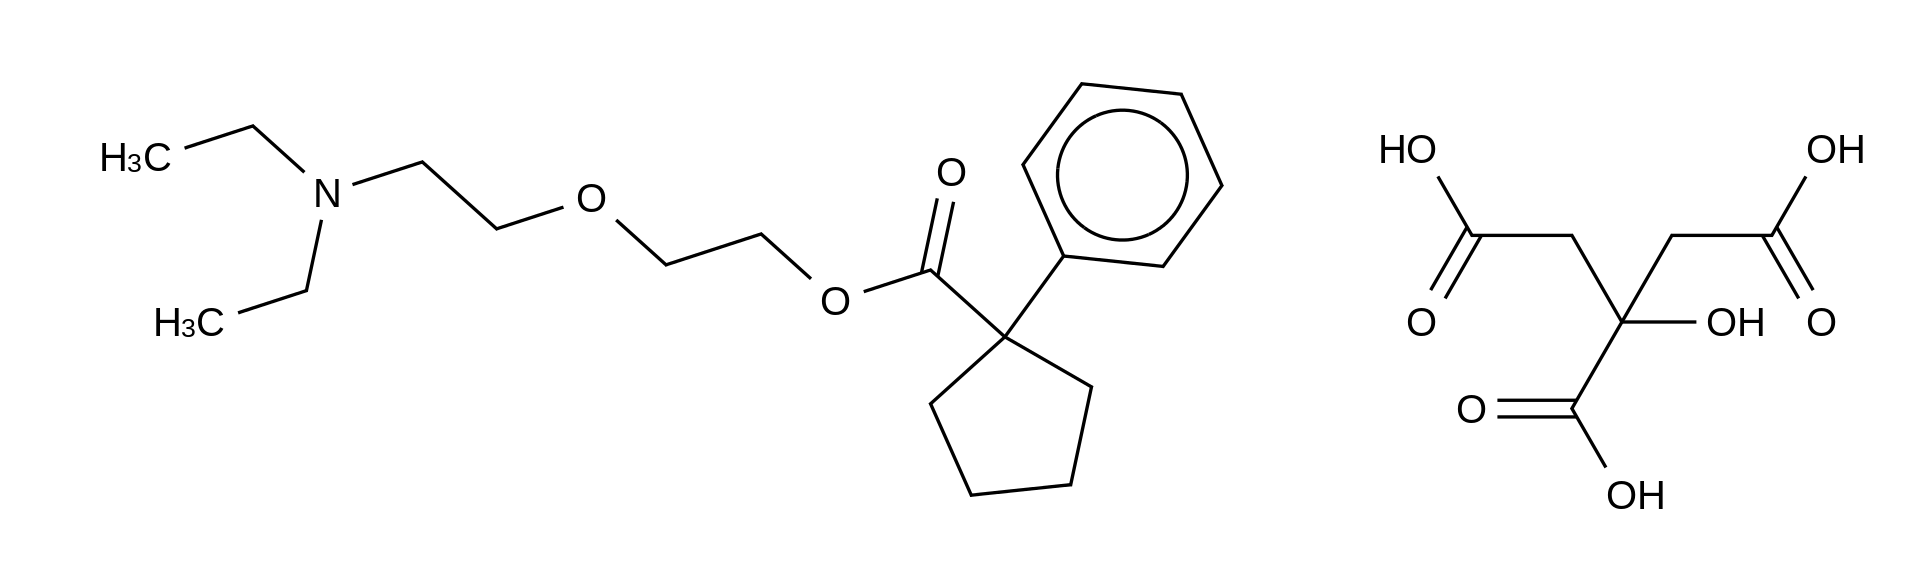 Pentoxyverine Citrate